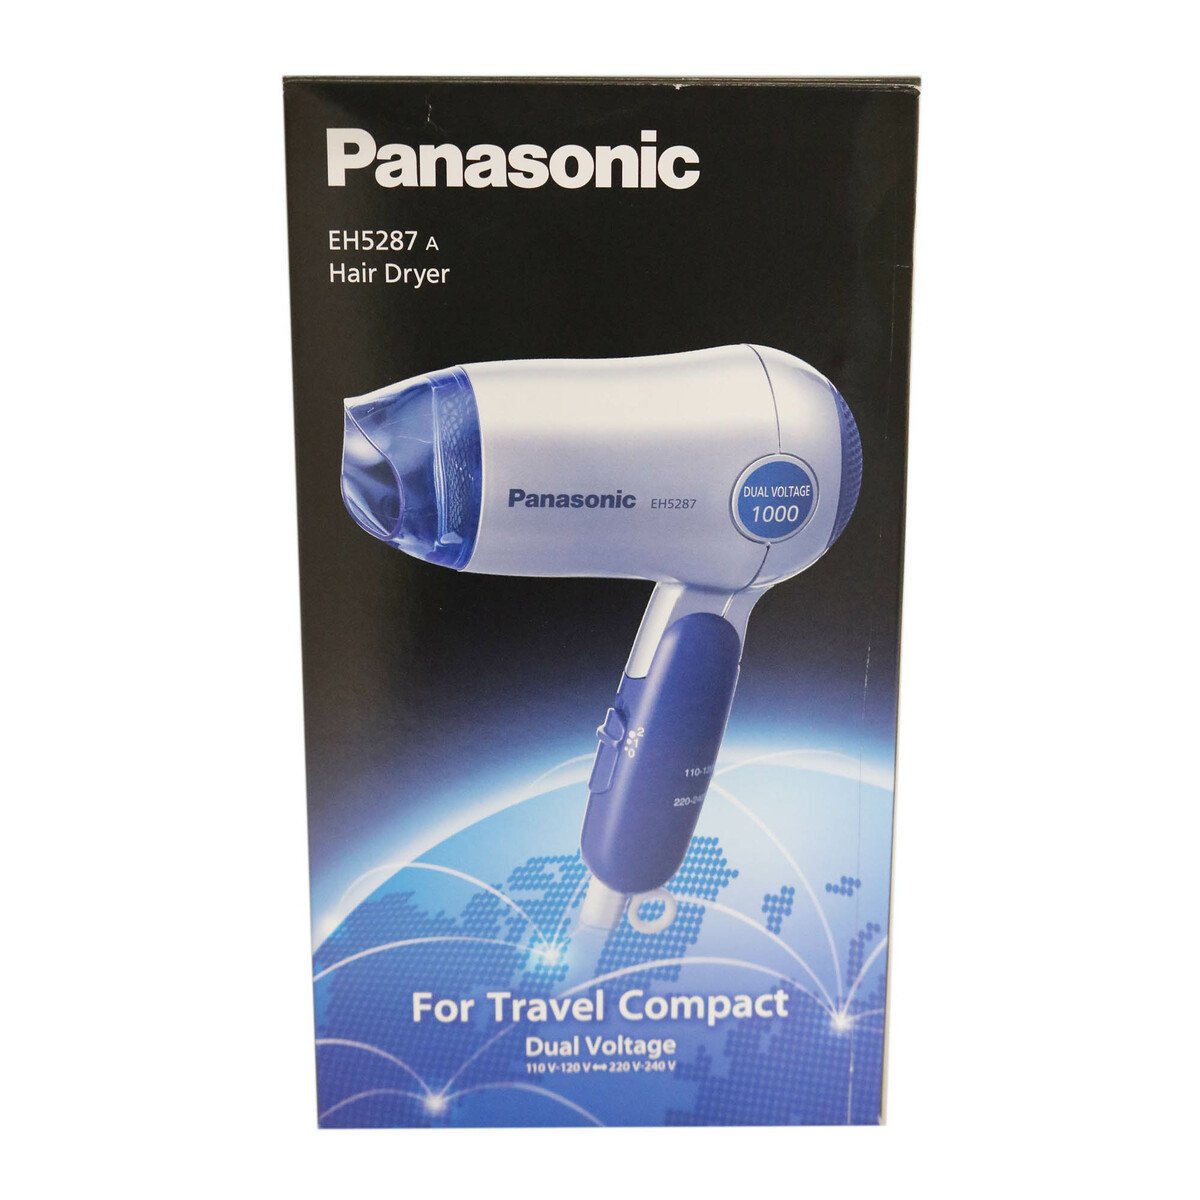 Panasonic Hair Dryer Eh-5287